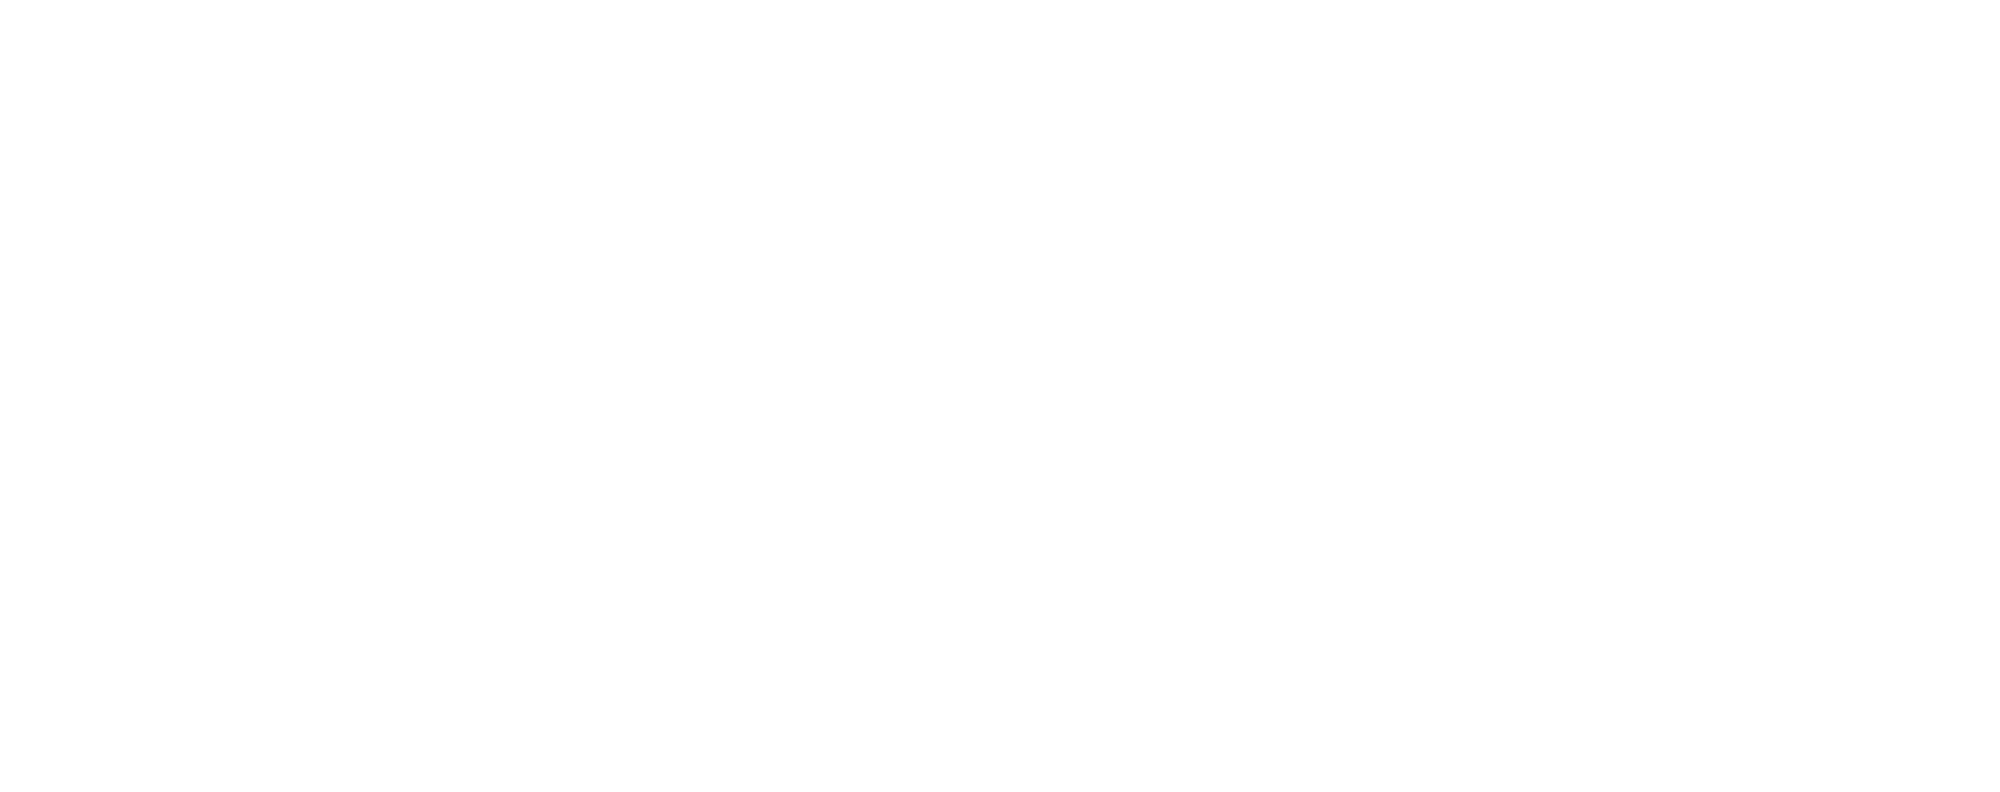 ferrero-rocher_-1